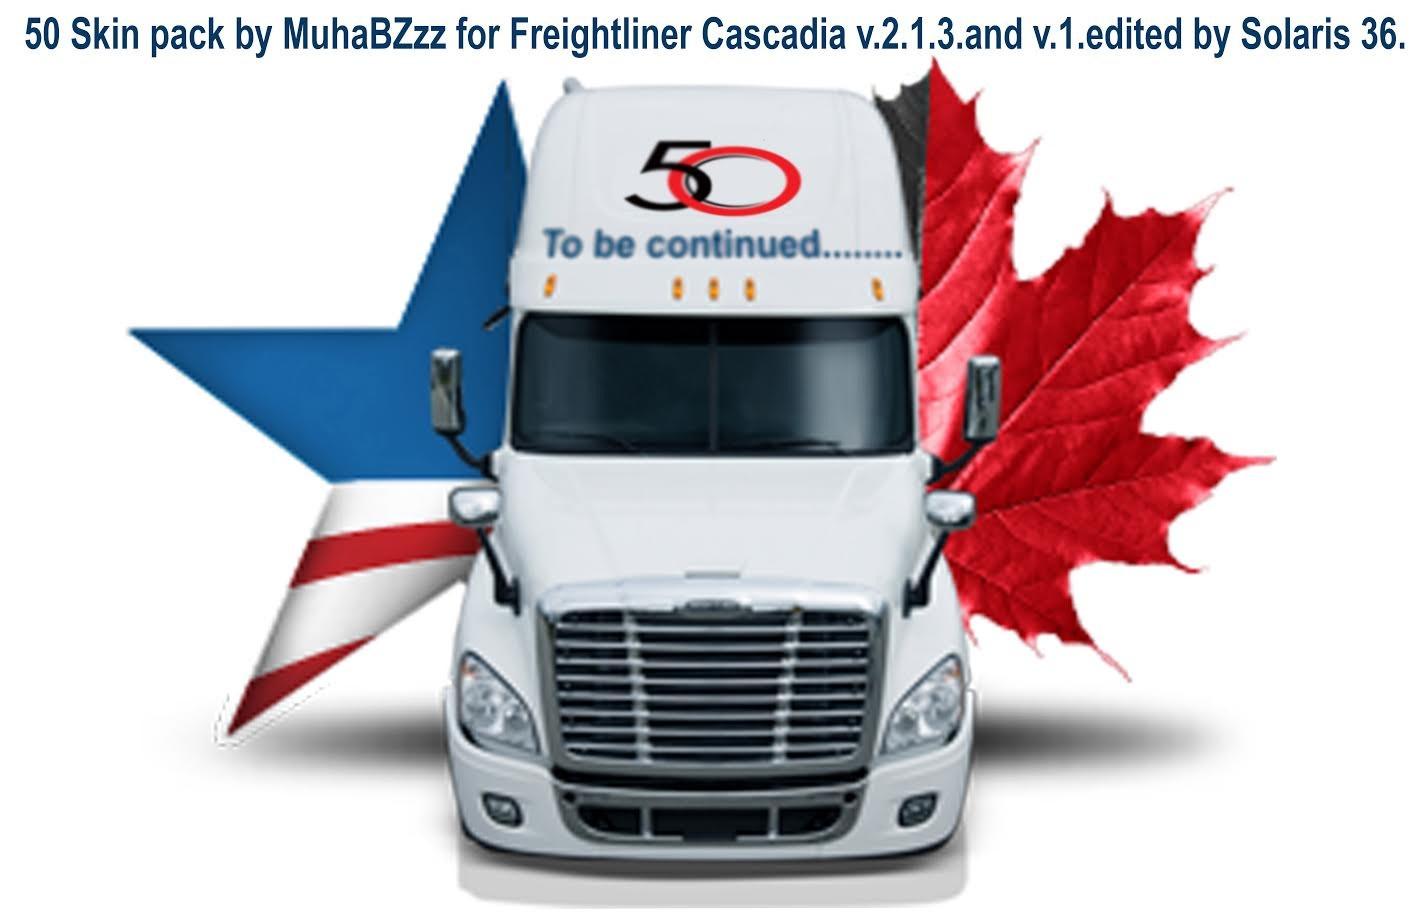 50 Skin Pack for Freightliner Cascadia V2.1.3 edited by Solaris36